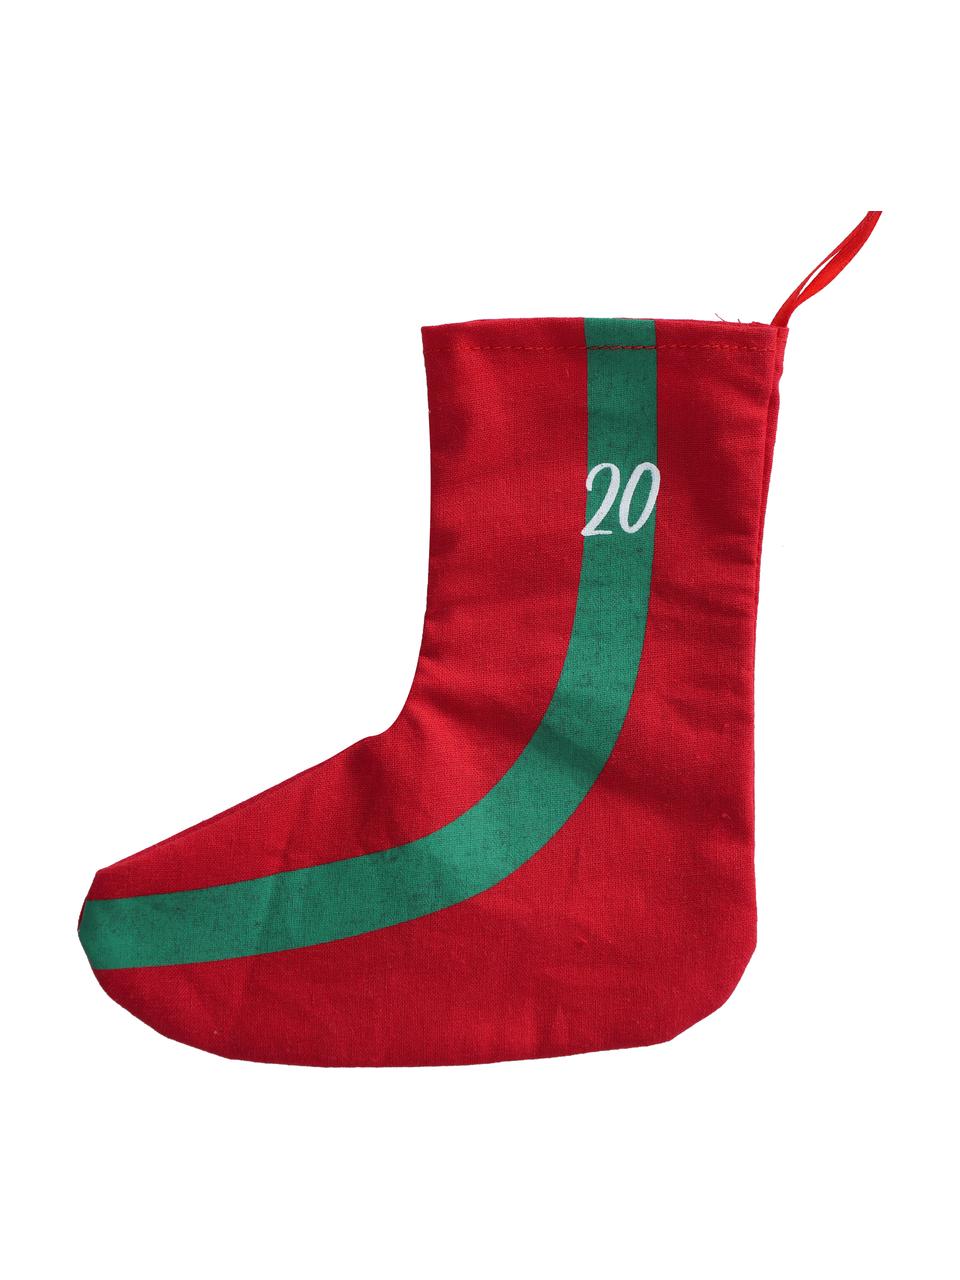 Adventskalender Socky, 280 cm, Filz, Dunkelgrün, Rot, Weiß, L 280 cm